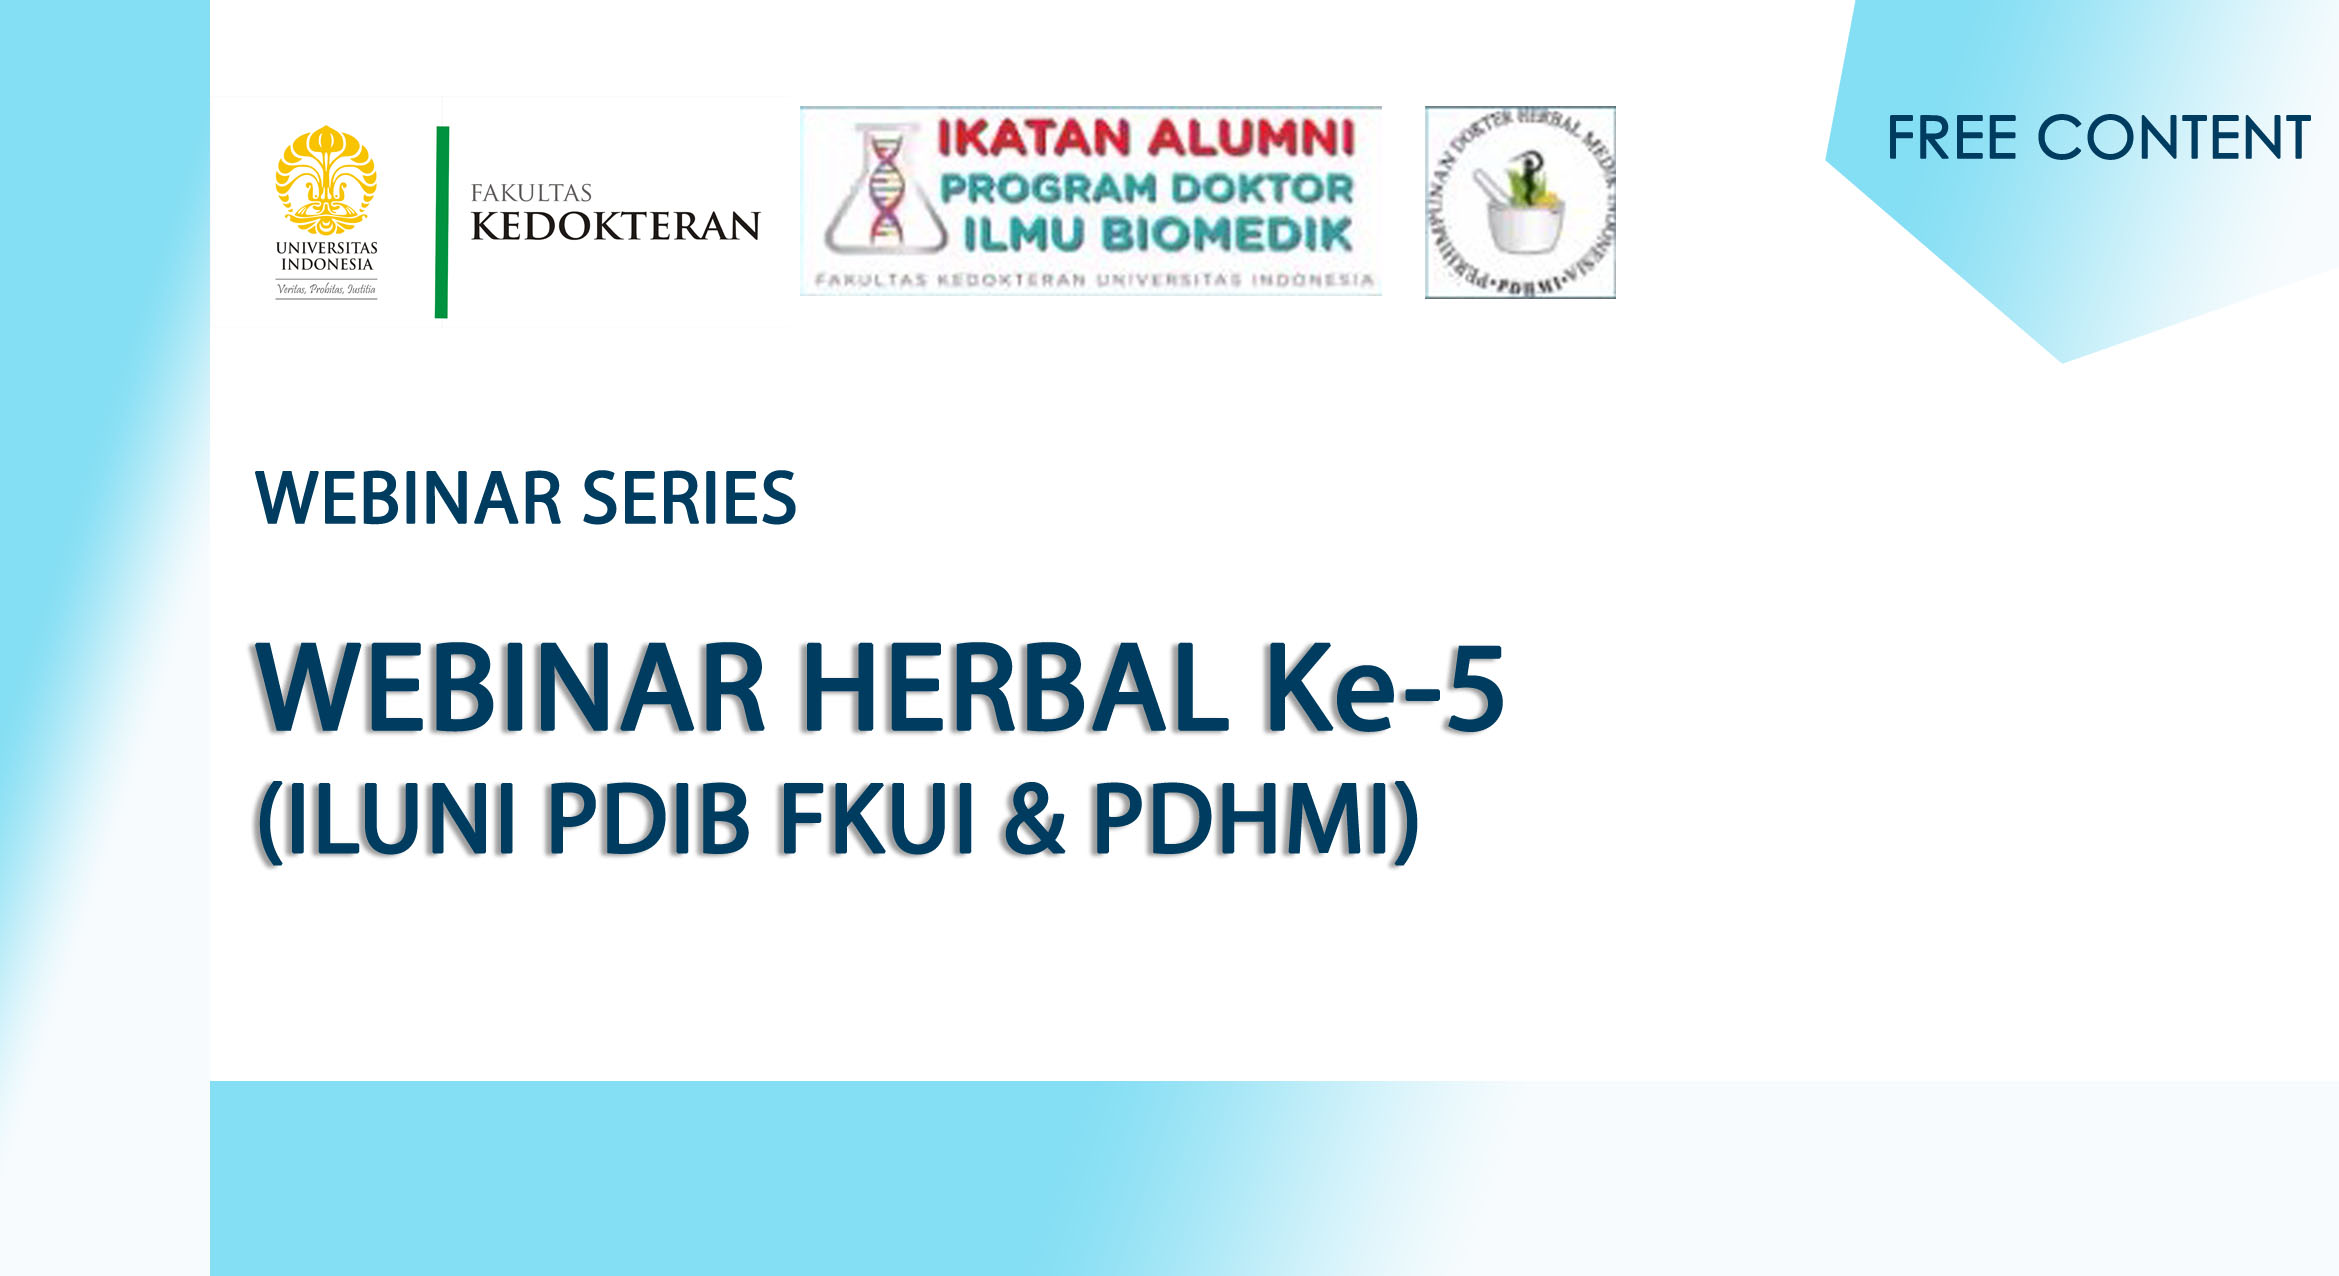 Course Image Webinar Herbal Series Ke-5 ILUNI PDIB & PDHMI Special Update COVID-19